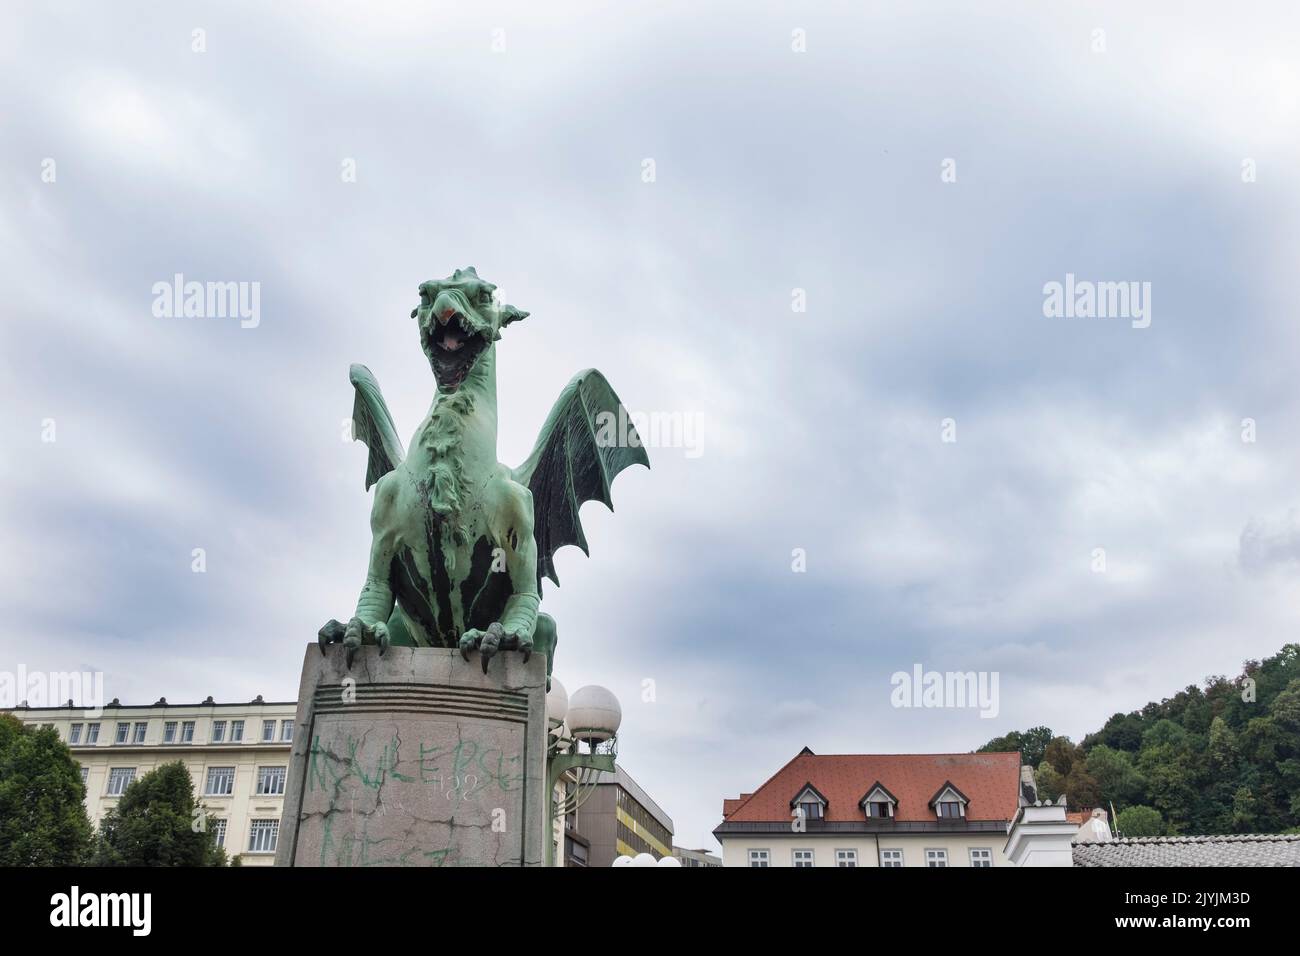 Slowenien, Ljubljana, Drachenbrücke, Drachenstatue auf der Drachenbrücke Zmajski Stockfoto